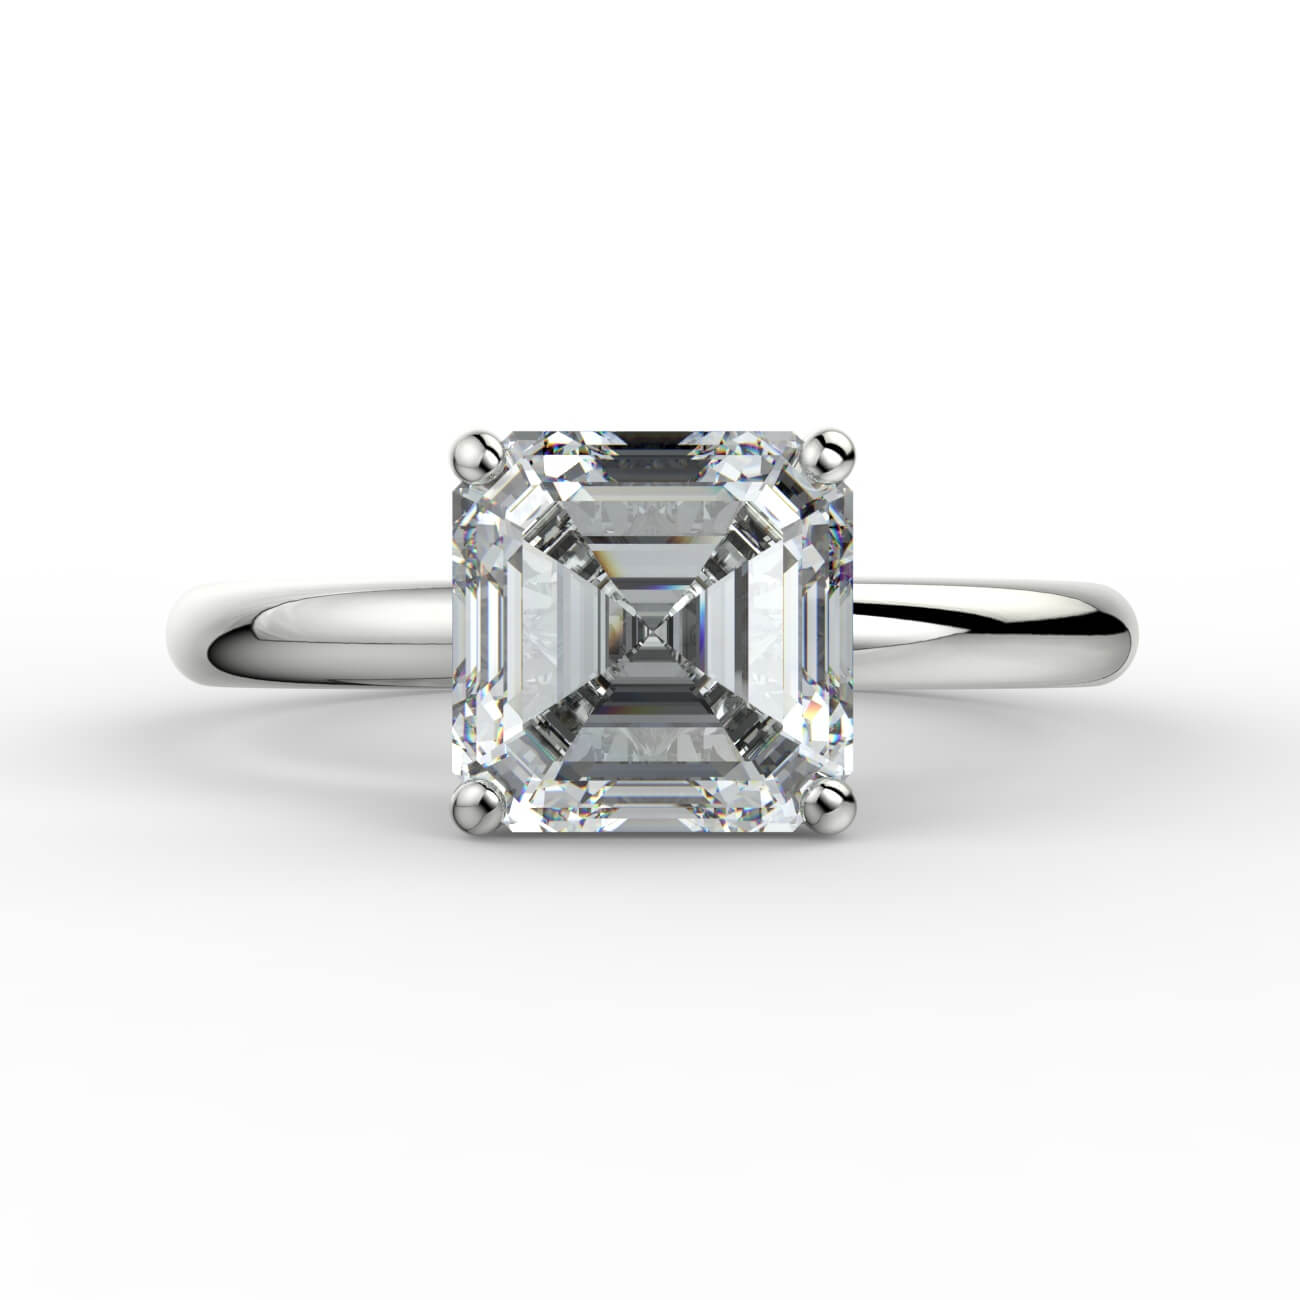 Comfort fit 4 claw asscher cut solitaire diamond ring in platinum – Australian Diamond Network